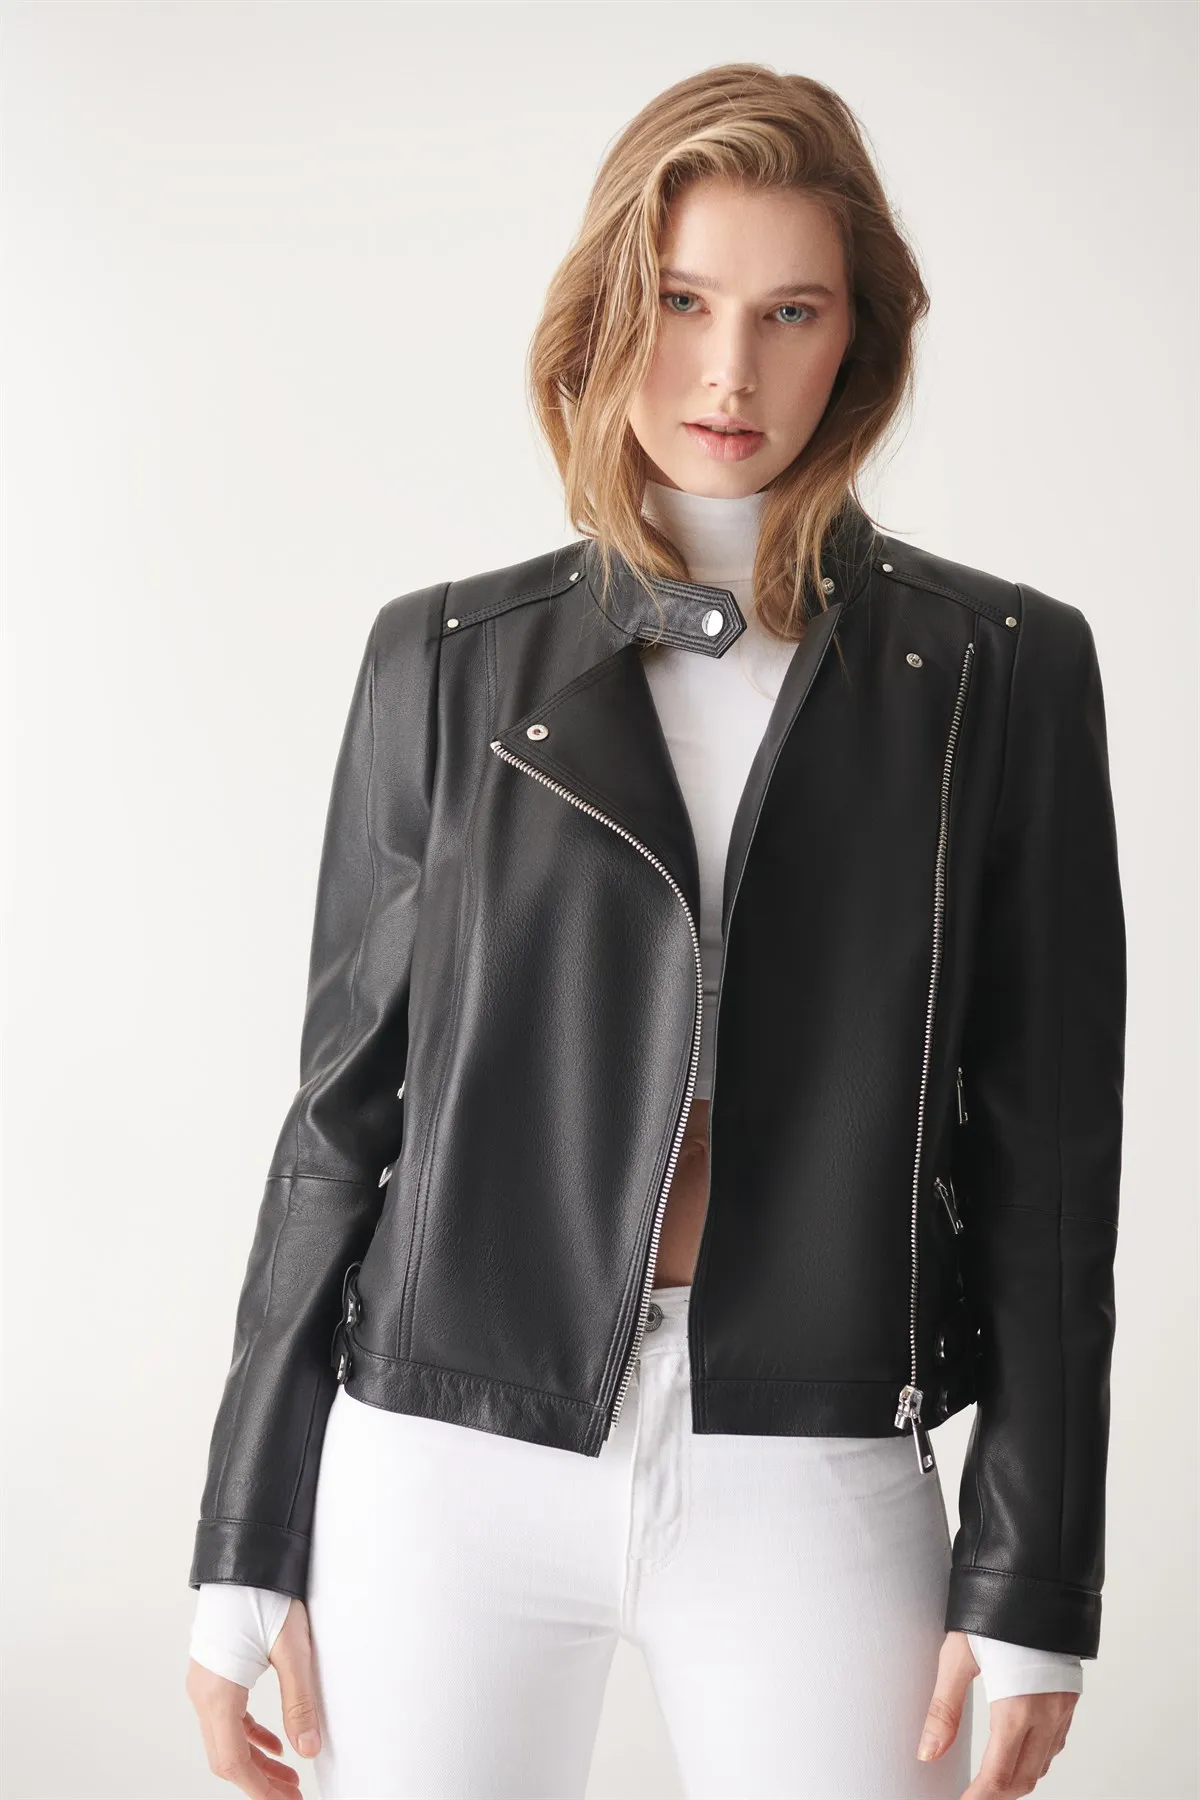 Black Biker Leather Jacket Genuine Leather Coats Women Sheepskin Outfits Spring Summer Fashion Classic Sports Design Jackets